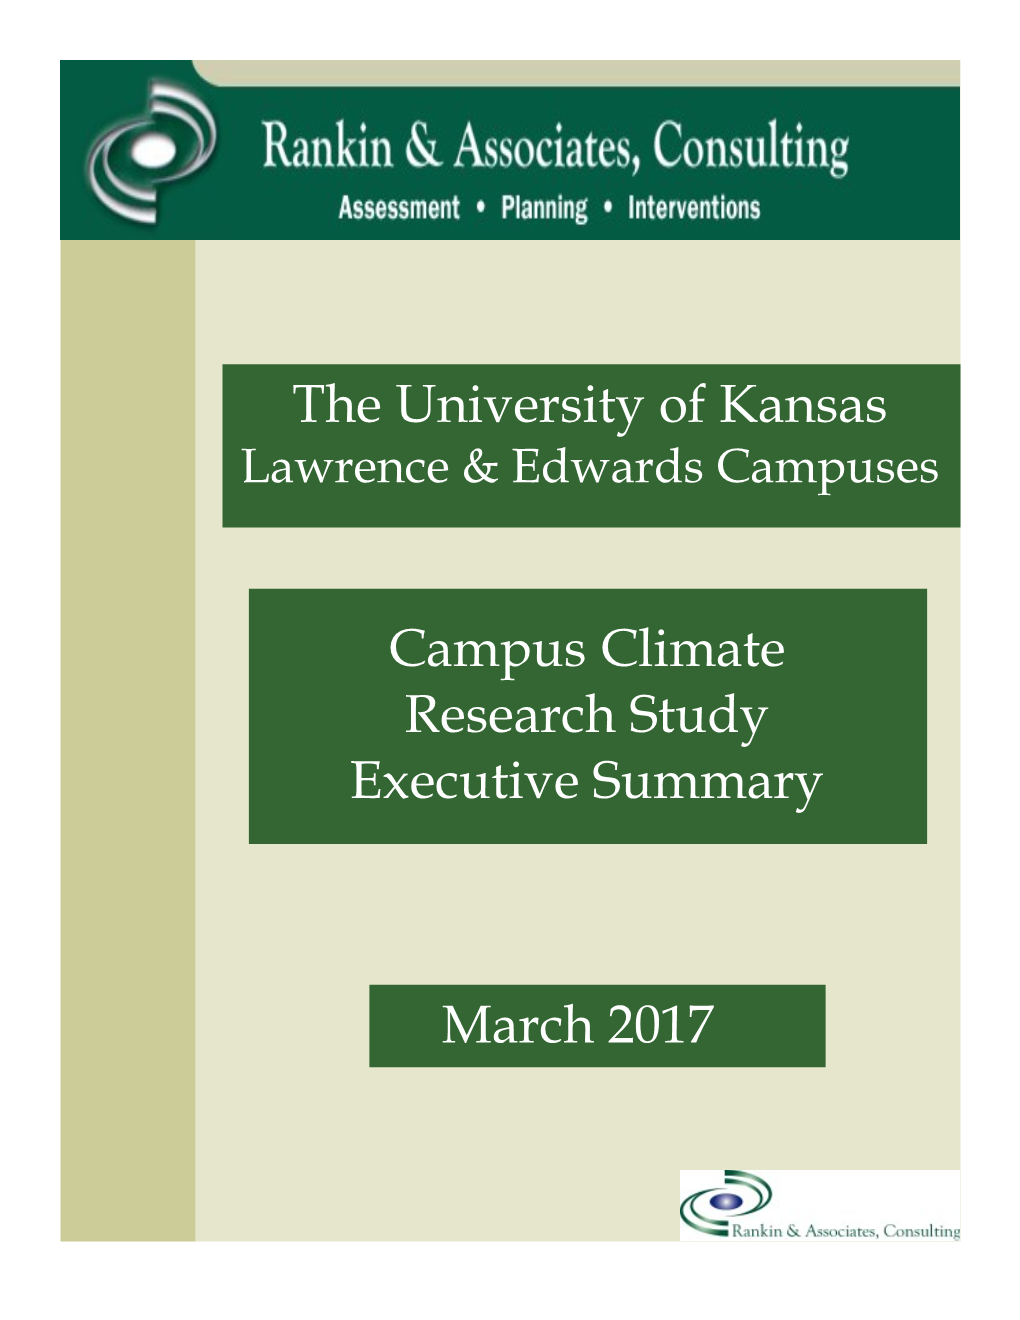 Lawrence & Edwards Campuses